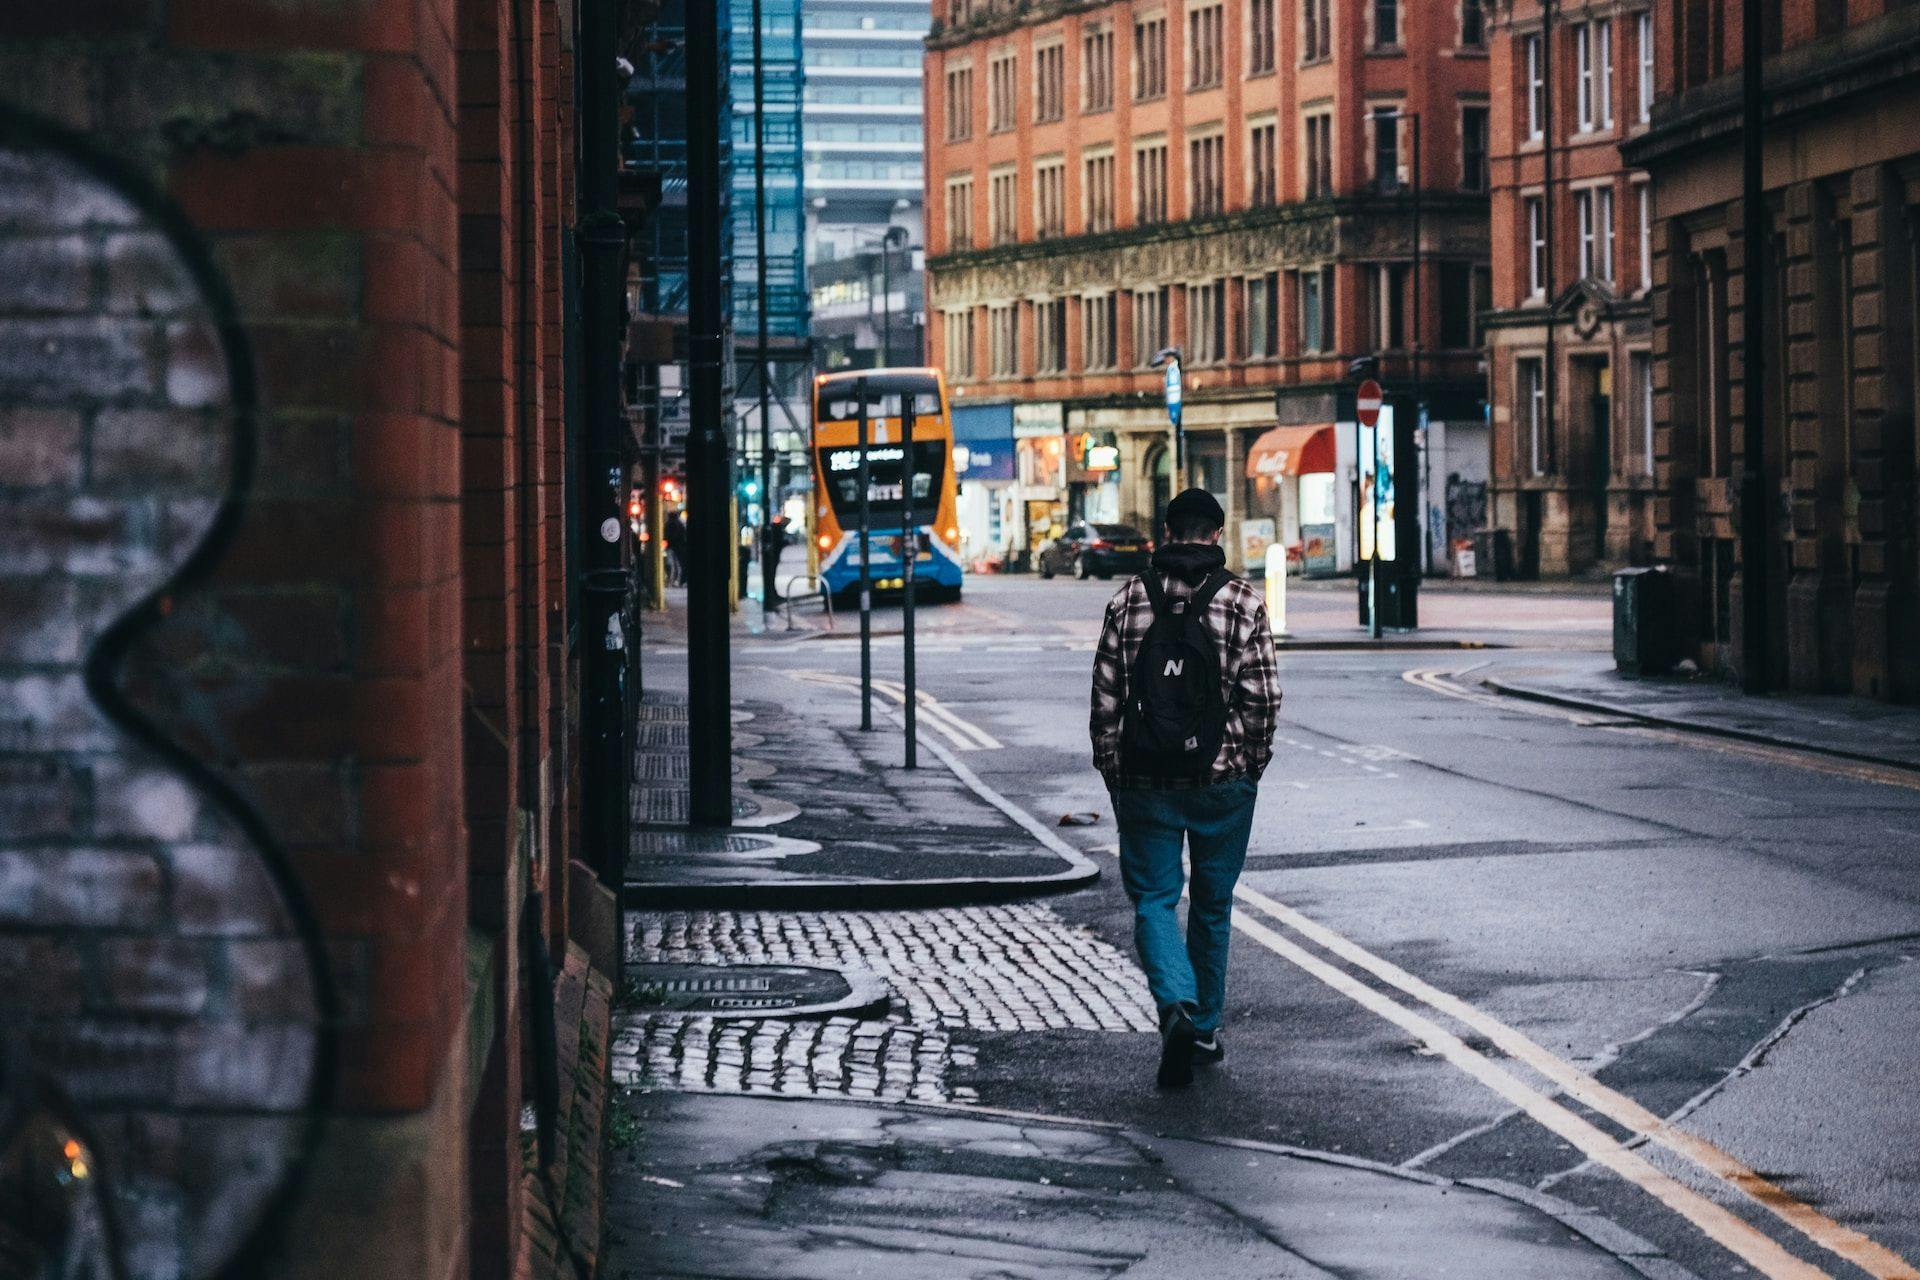 A man walking down a street next to tall buildings